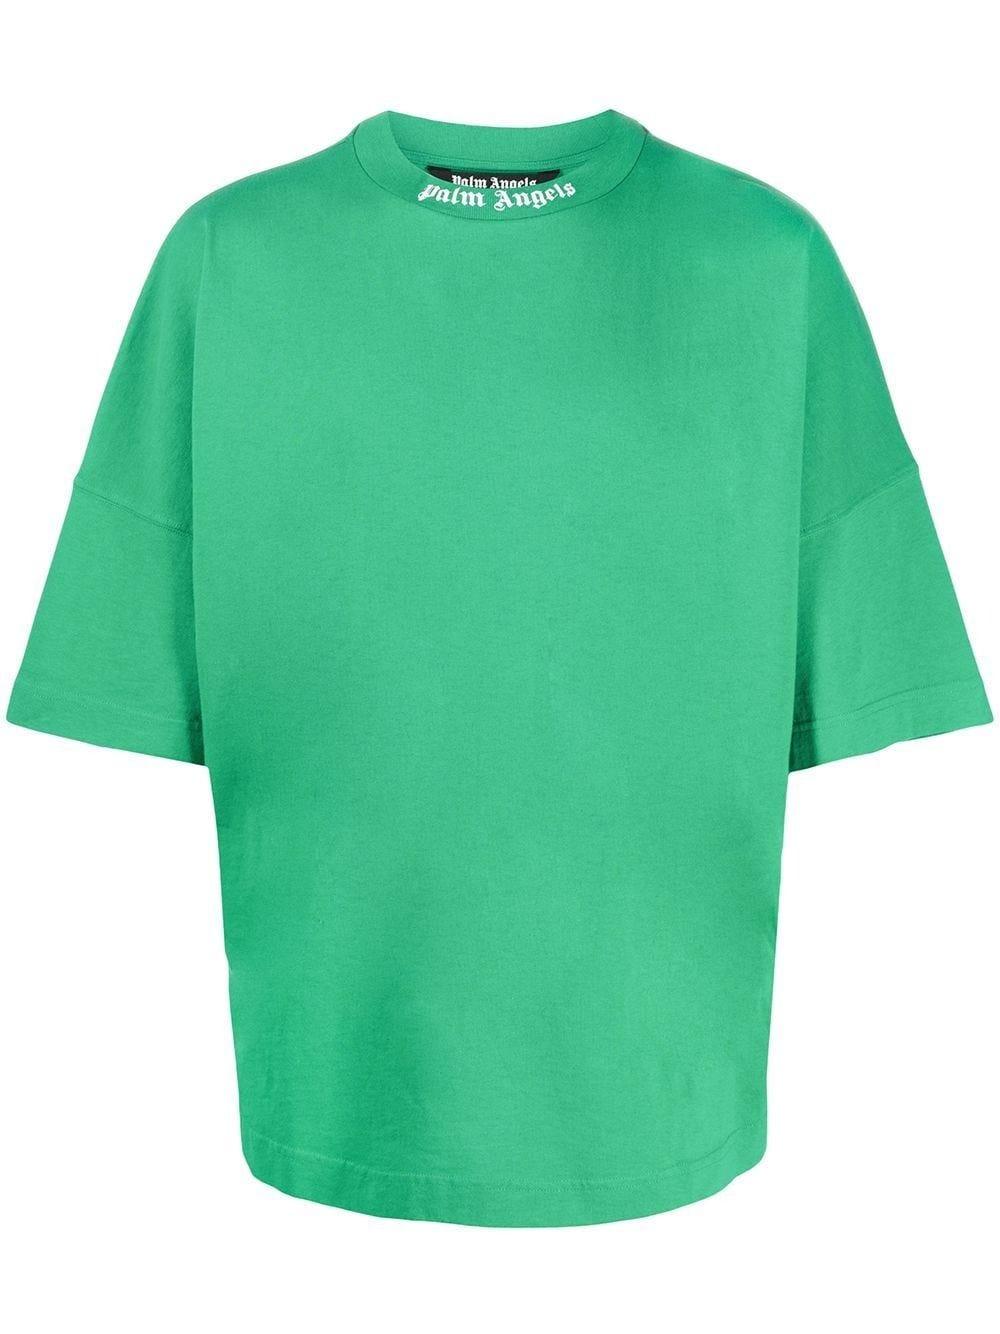 Palm Angels Rear Logo Print T-shirt in Green for Men | Lyst